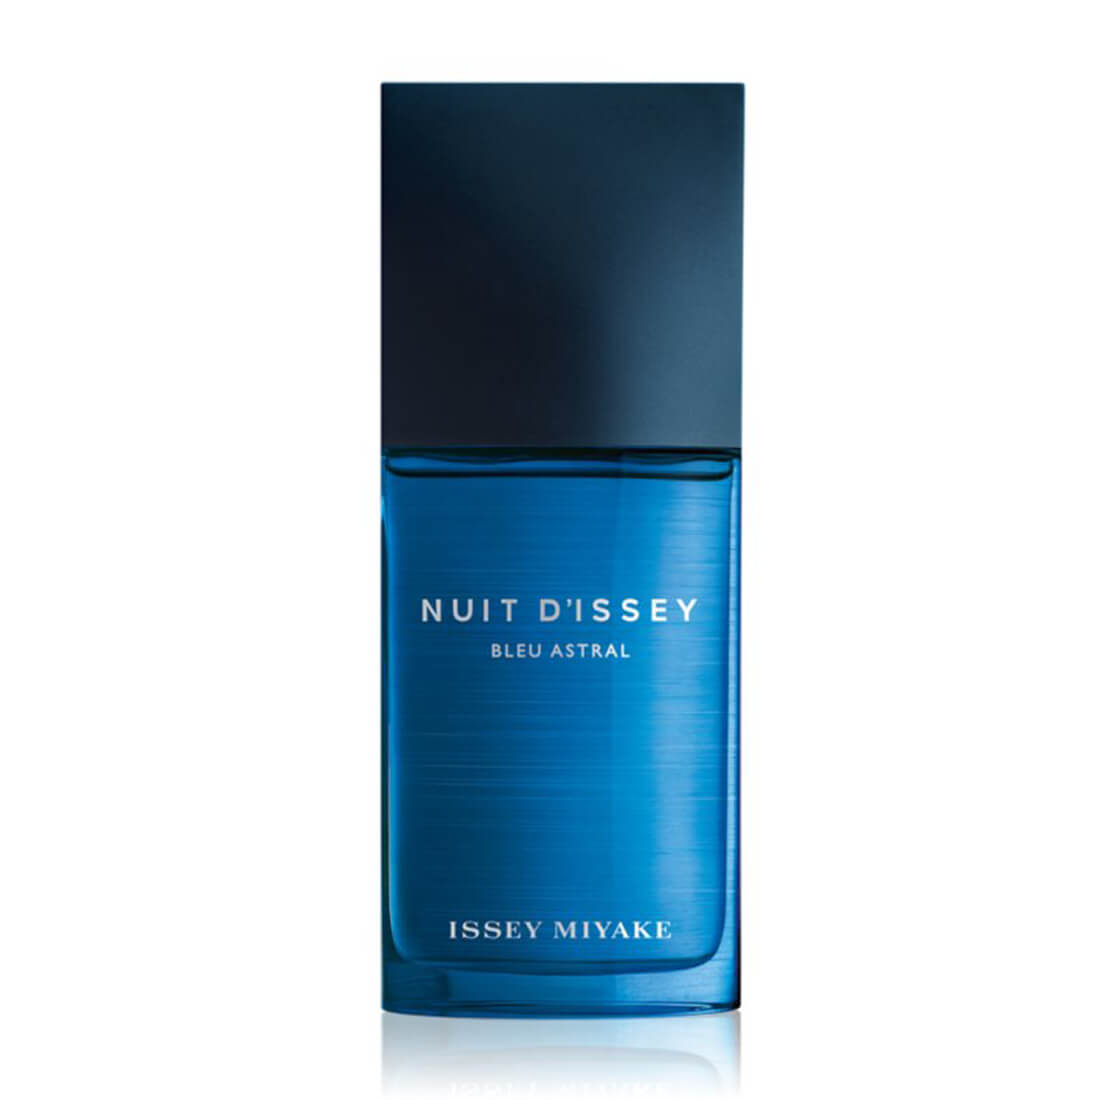 Issey Miyake Nuit D'Issey Bleu Astral Eau De Toilette for Men